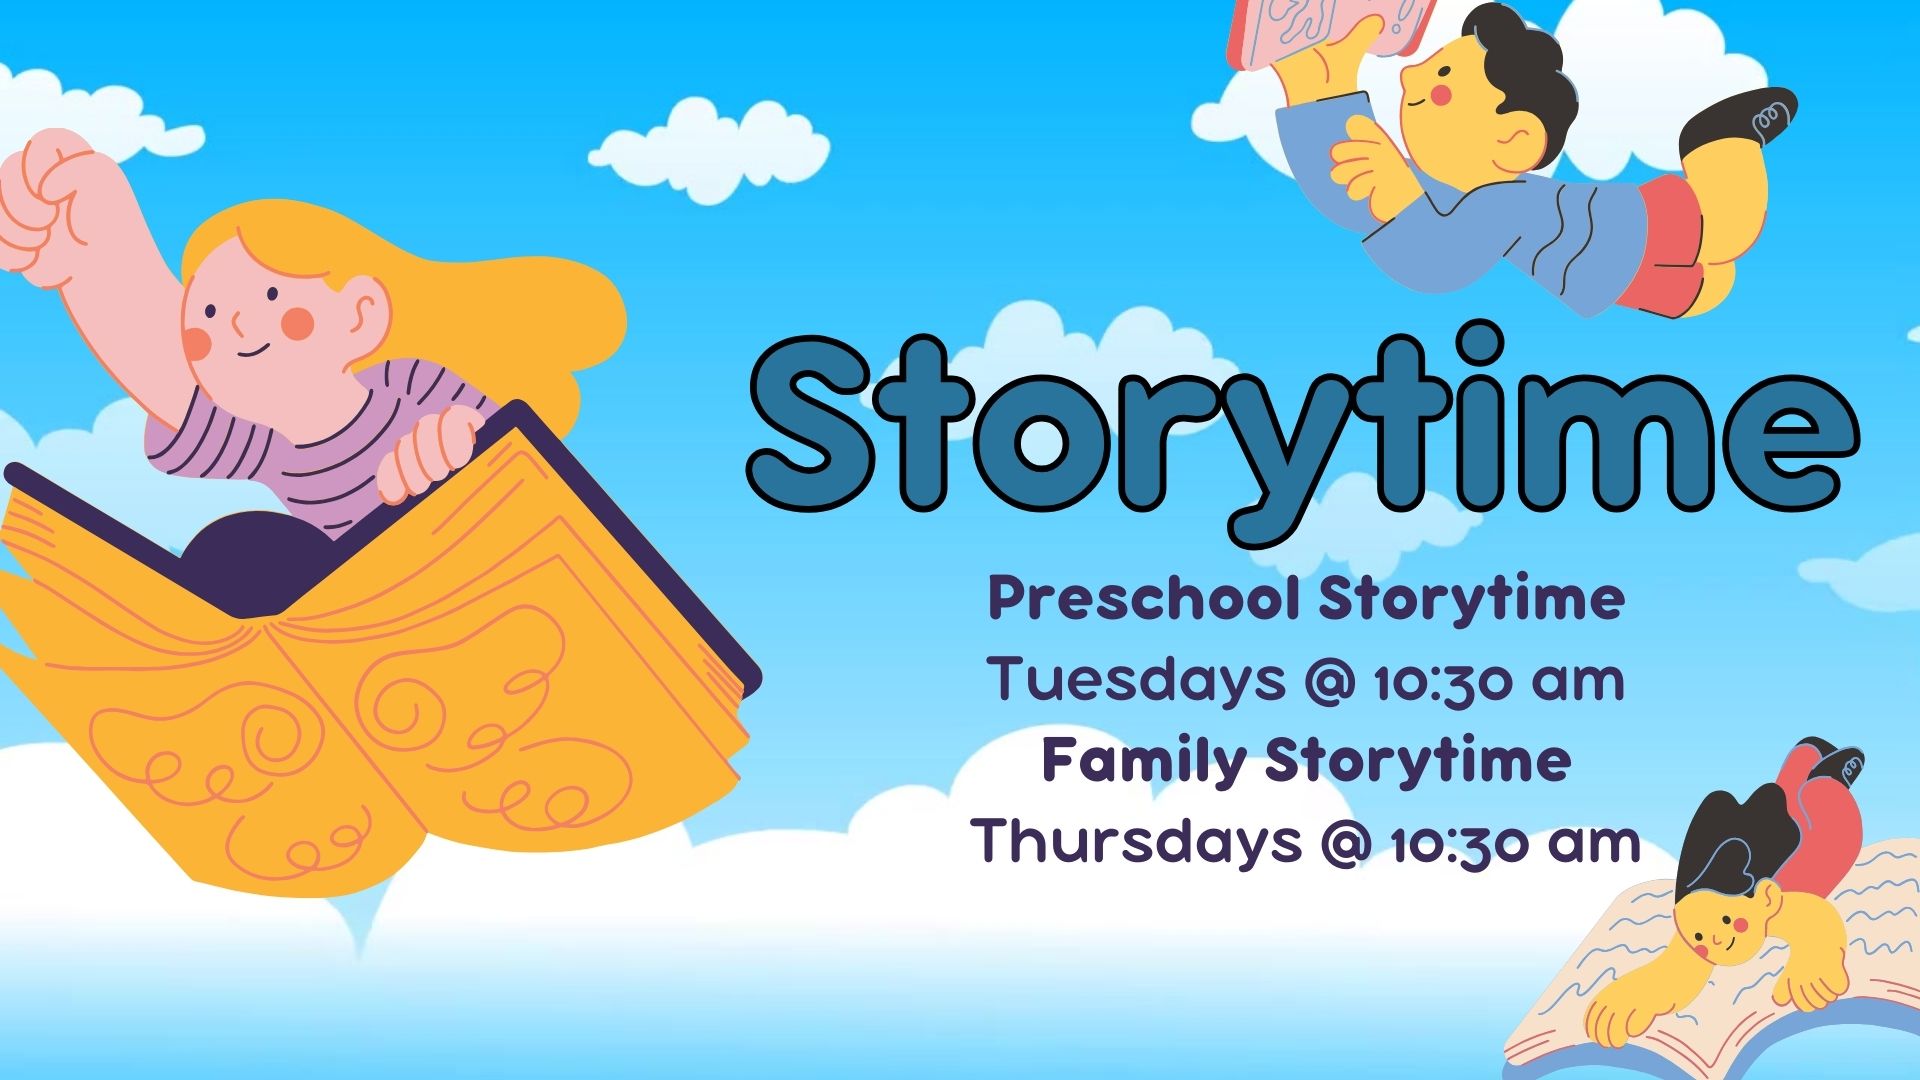 Image for Preschool Storytime